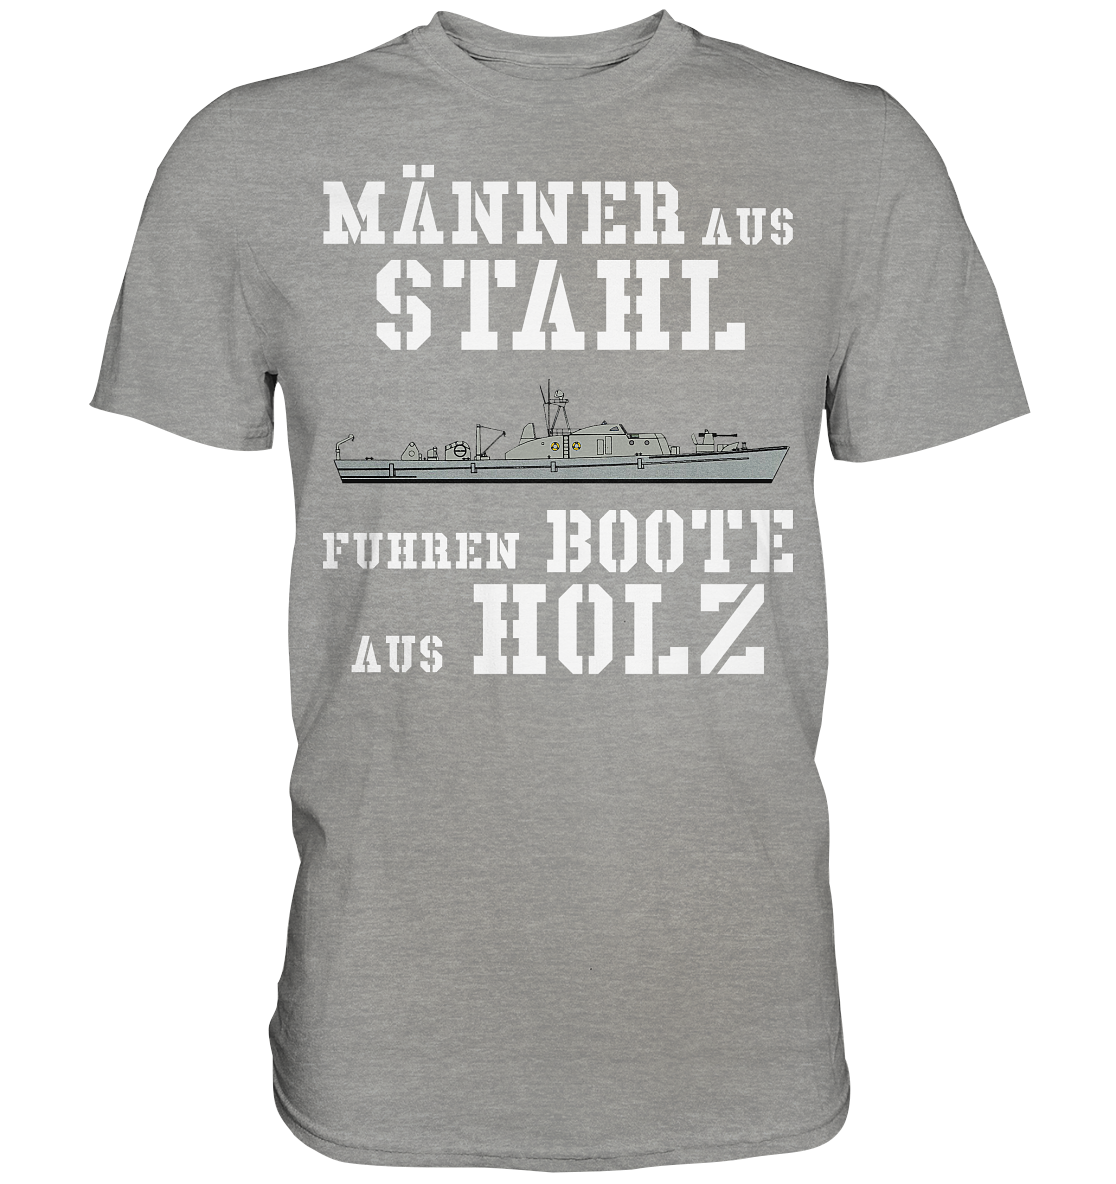 Männer aus Stahl...  SM-Boot SCHÜTZE-Klasse - Premium Shirt